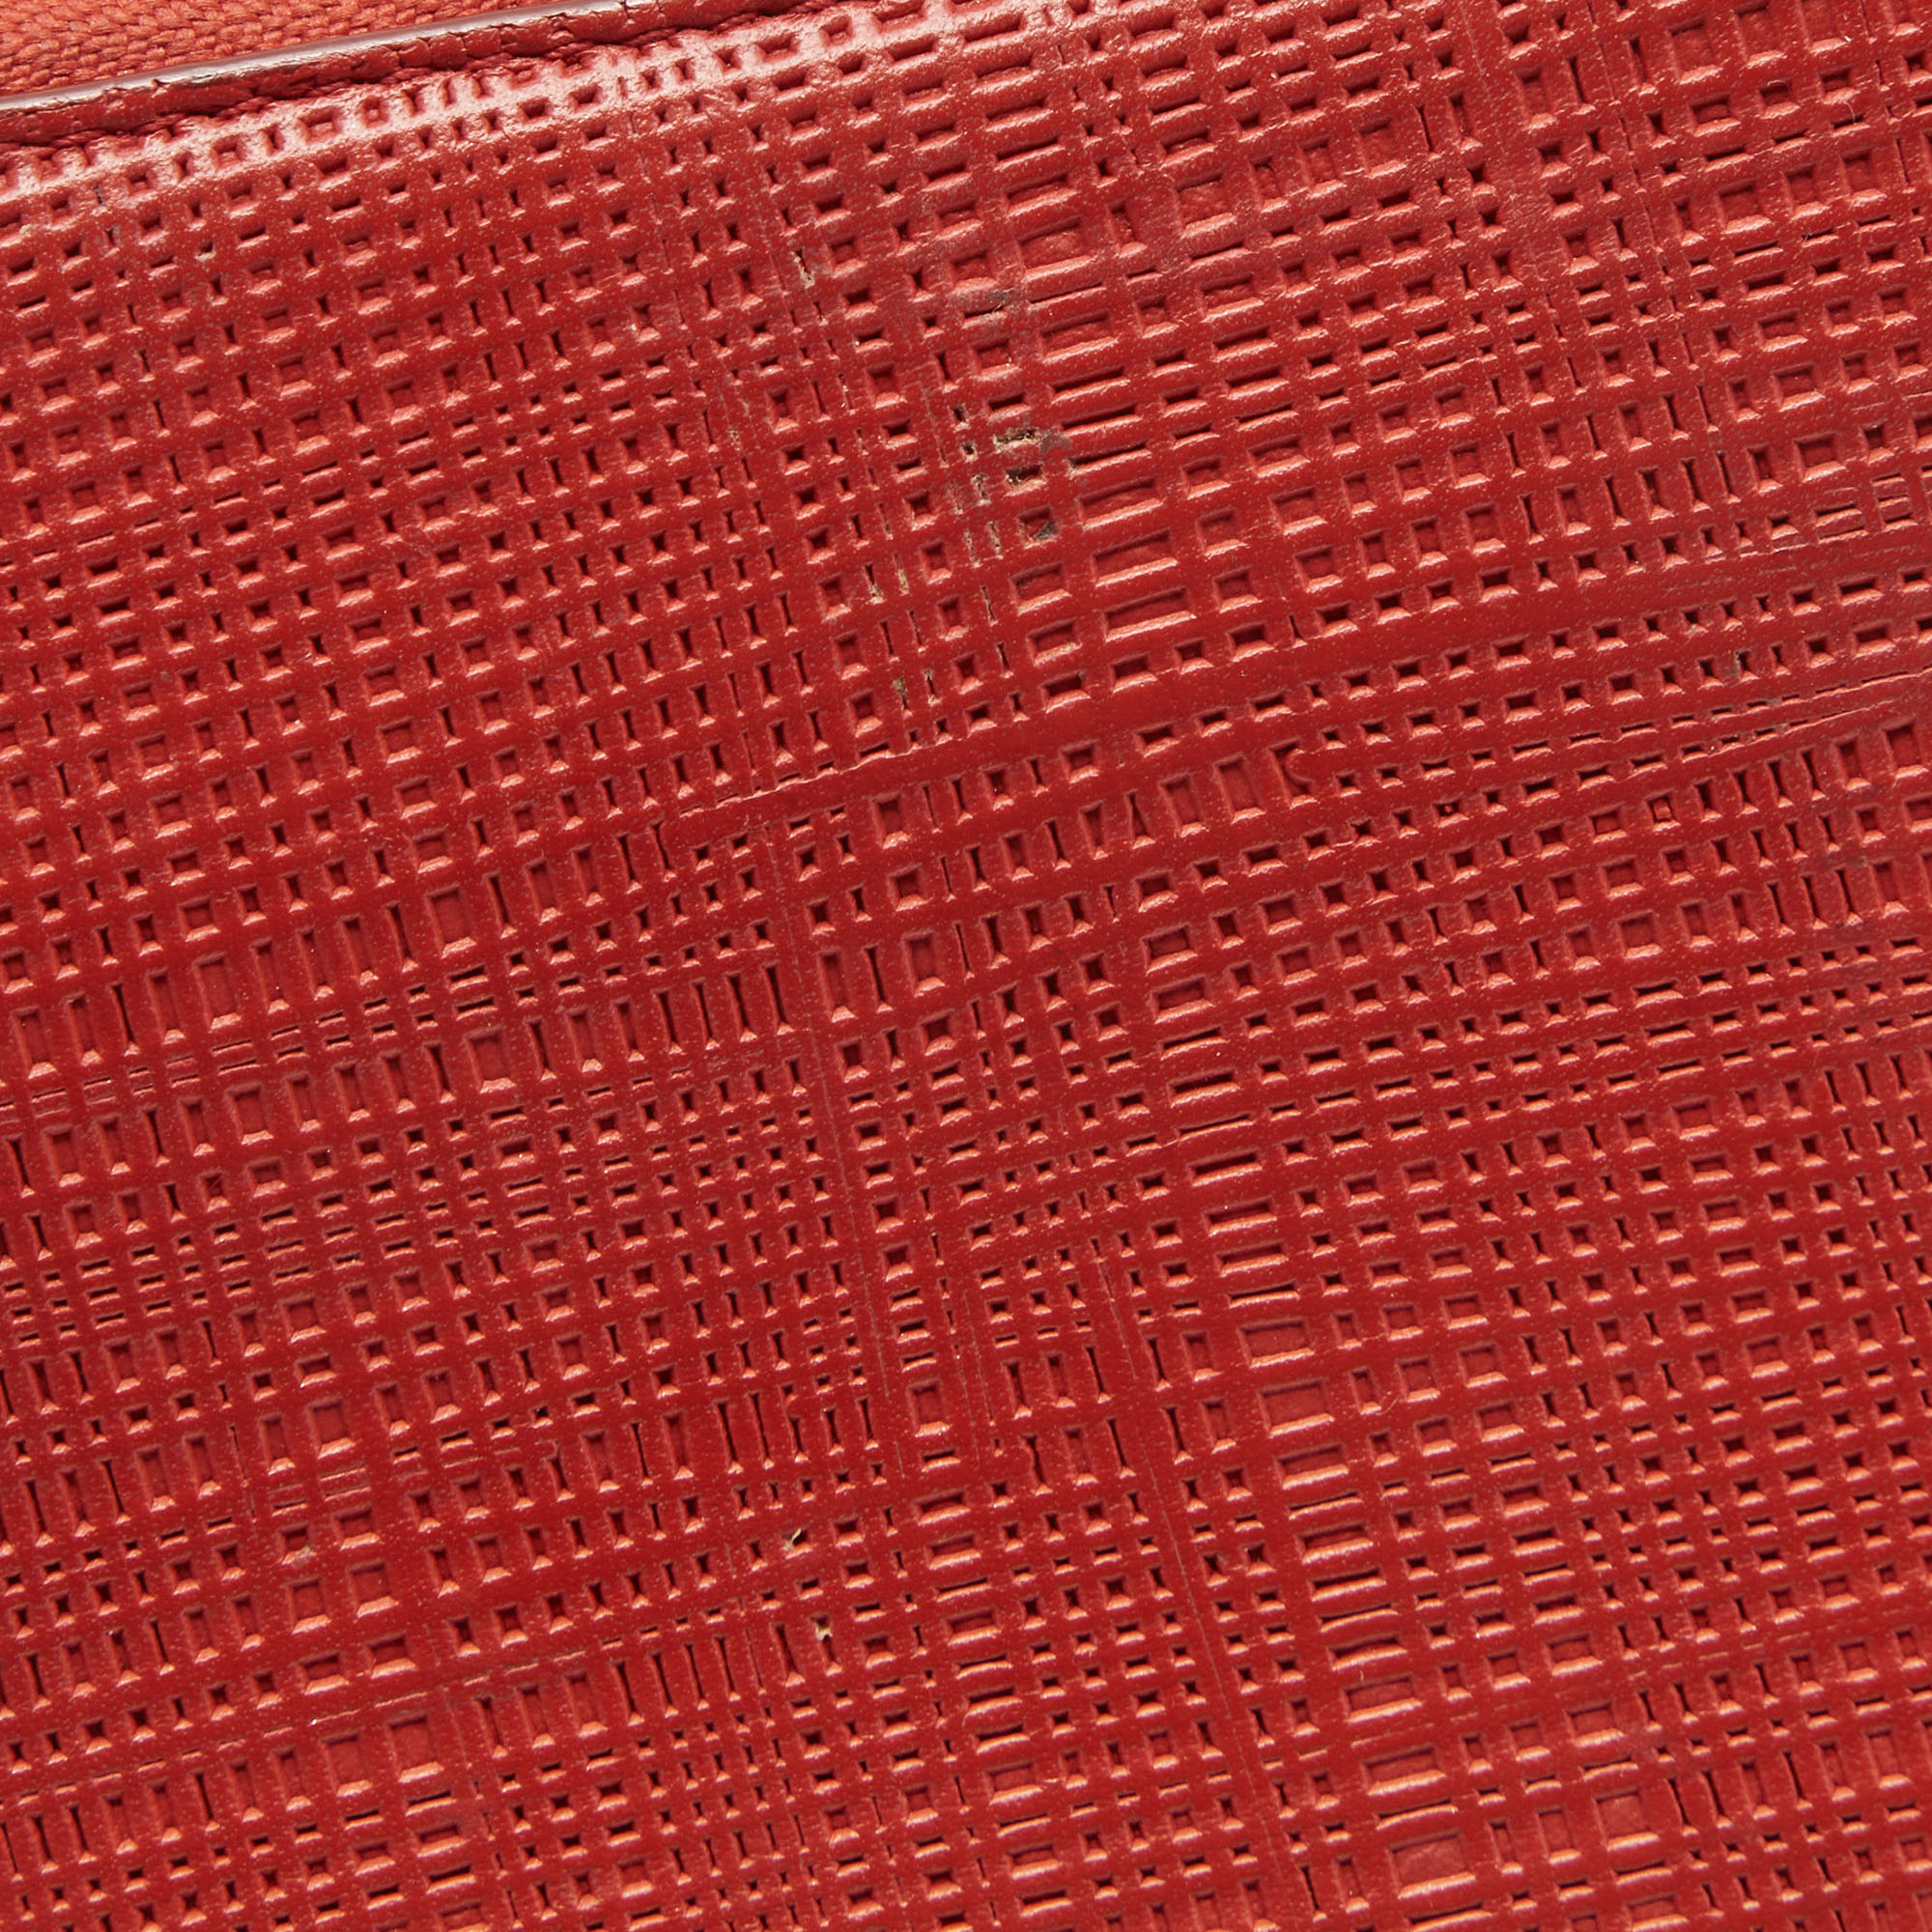 Loewe Red Textured Leather Zip Around Continental Wallet